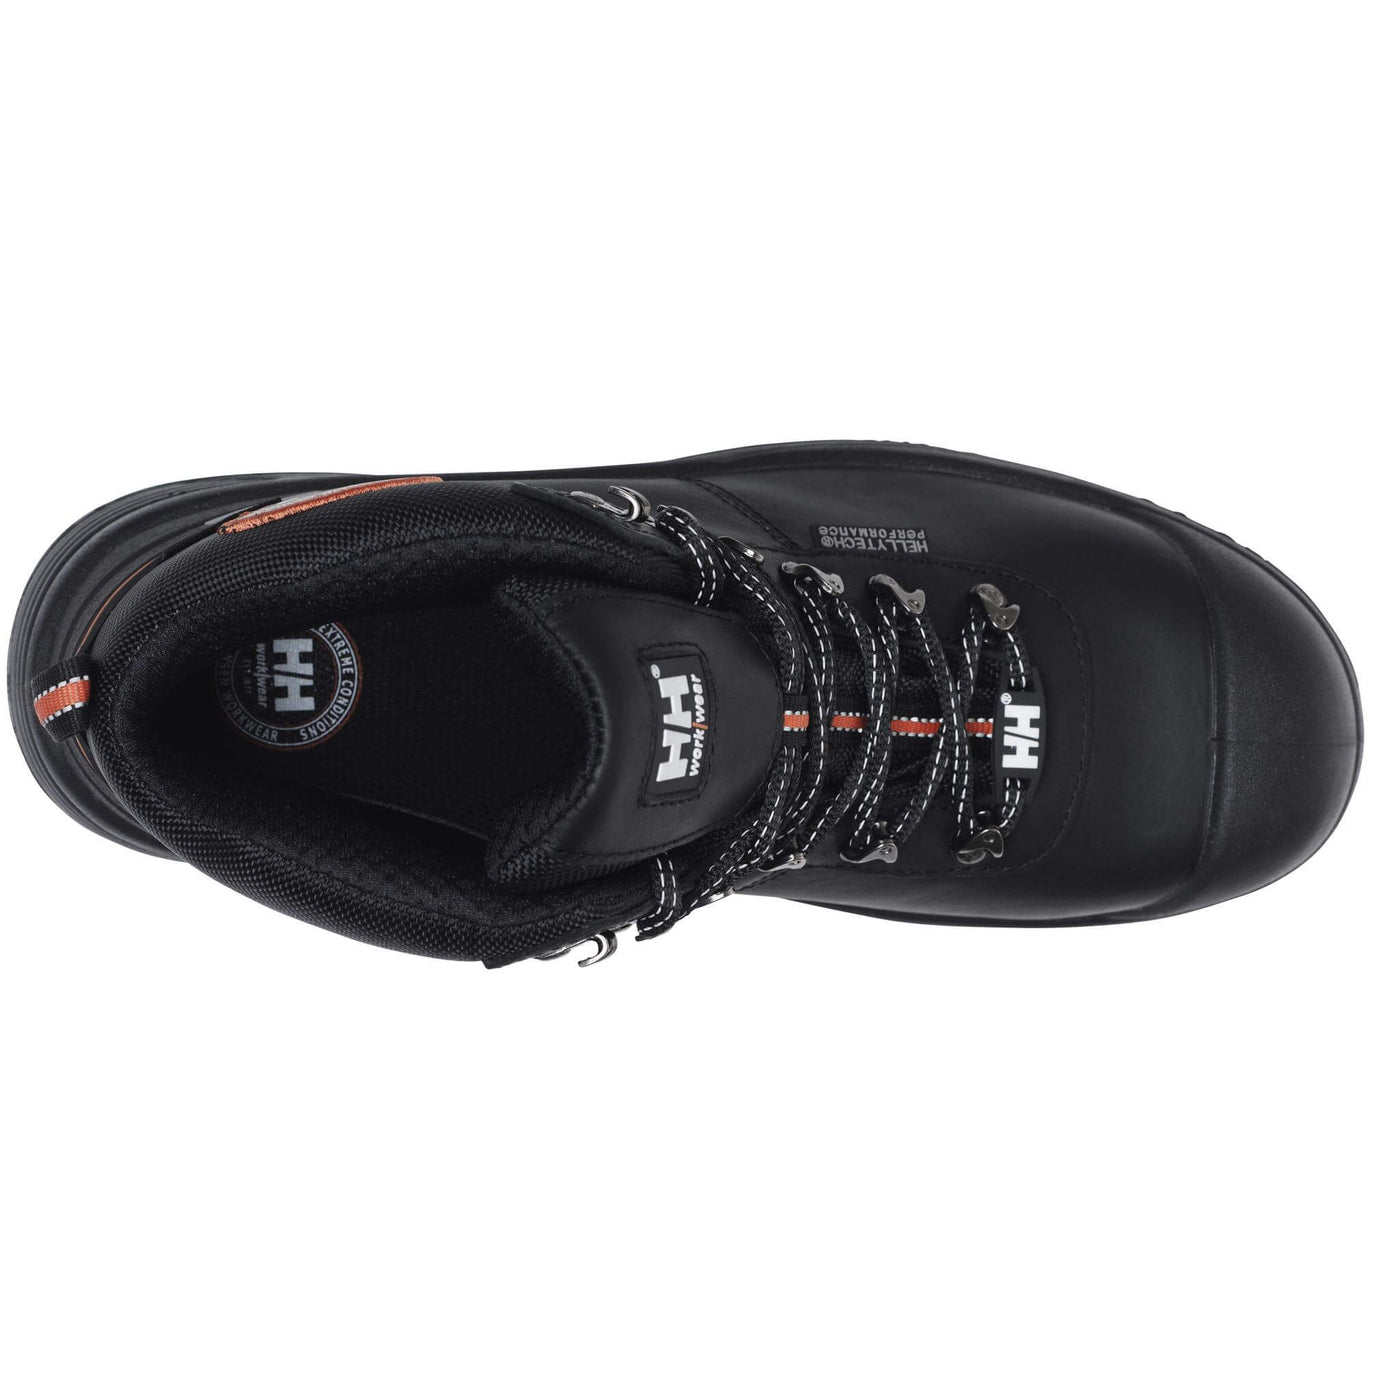 Helly Hansen Chelsea Waterproof Composite Toe Cap Work Safety Shoes Black/Orange Top#colour_black-orange